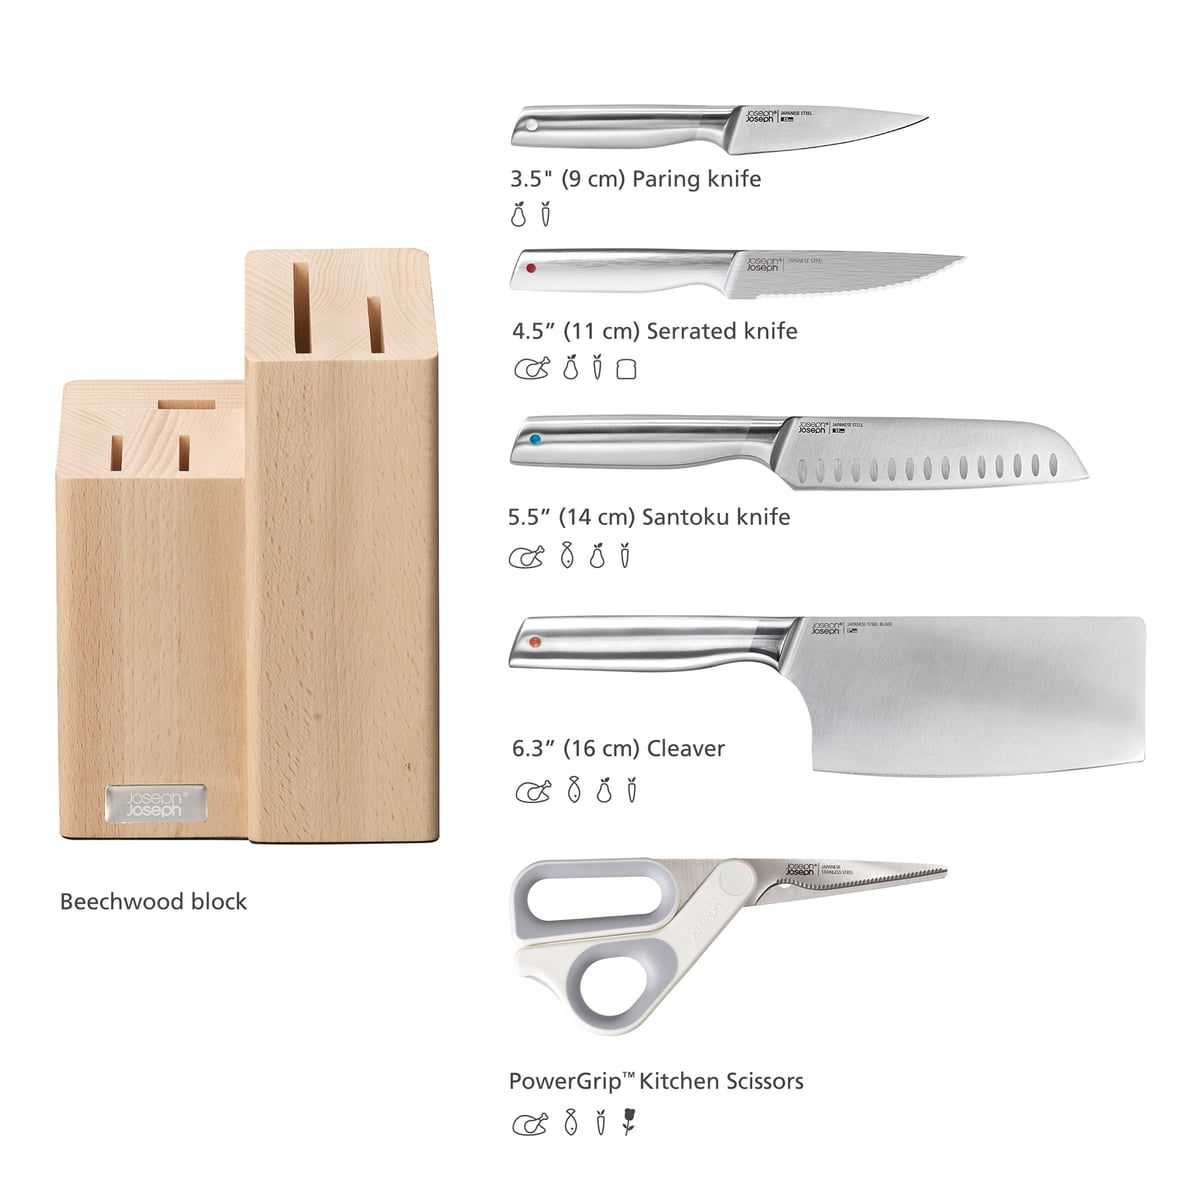 Joseph Joseph - Elevate Fusion Knife block with scissors